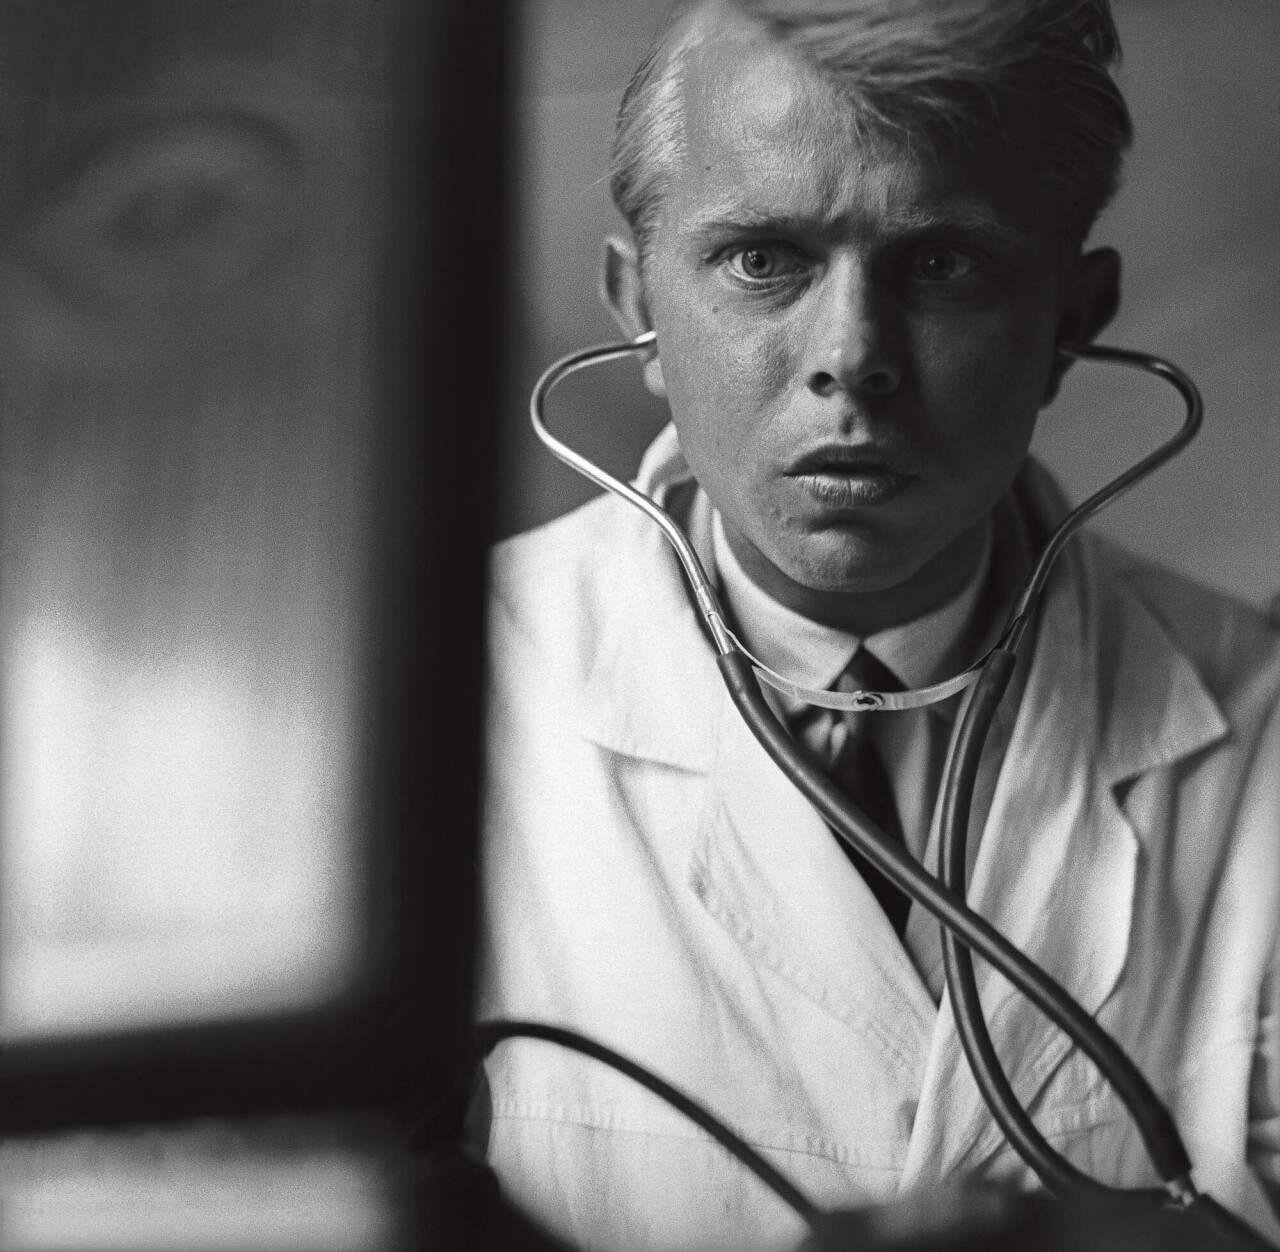 Молодой доктор, Нида, 1970 год, фотограф Антанас Суткус